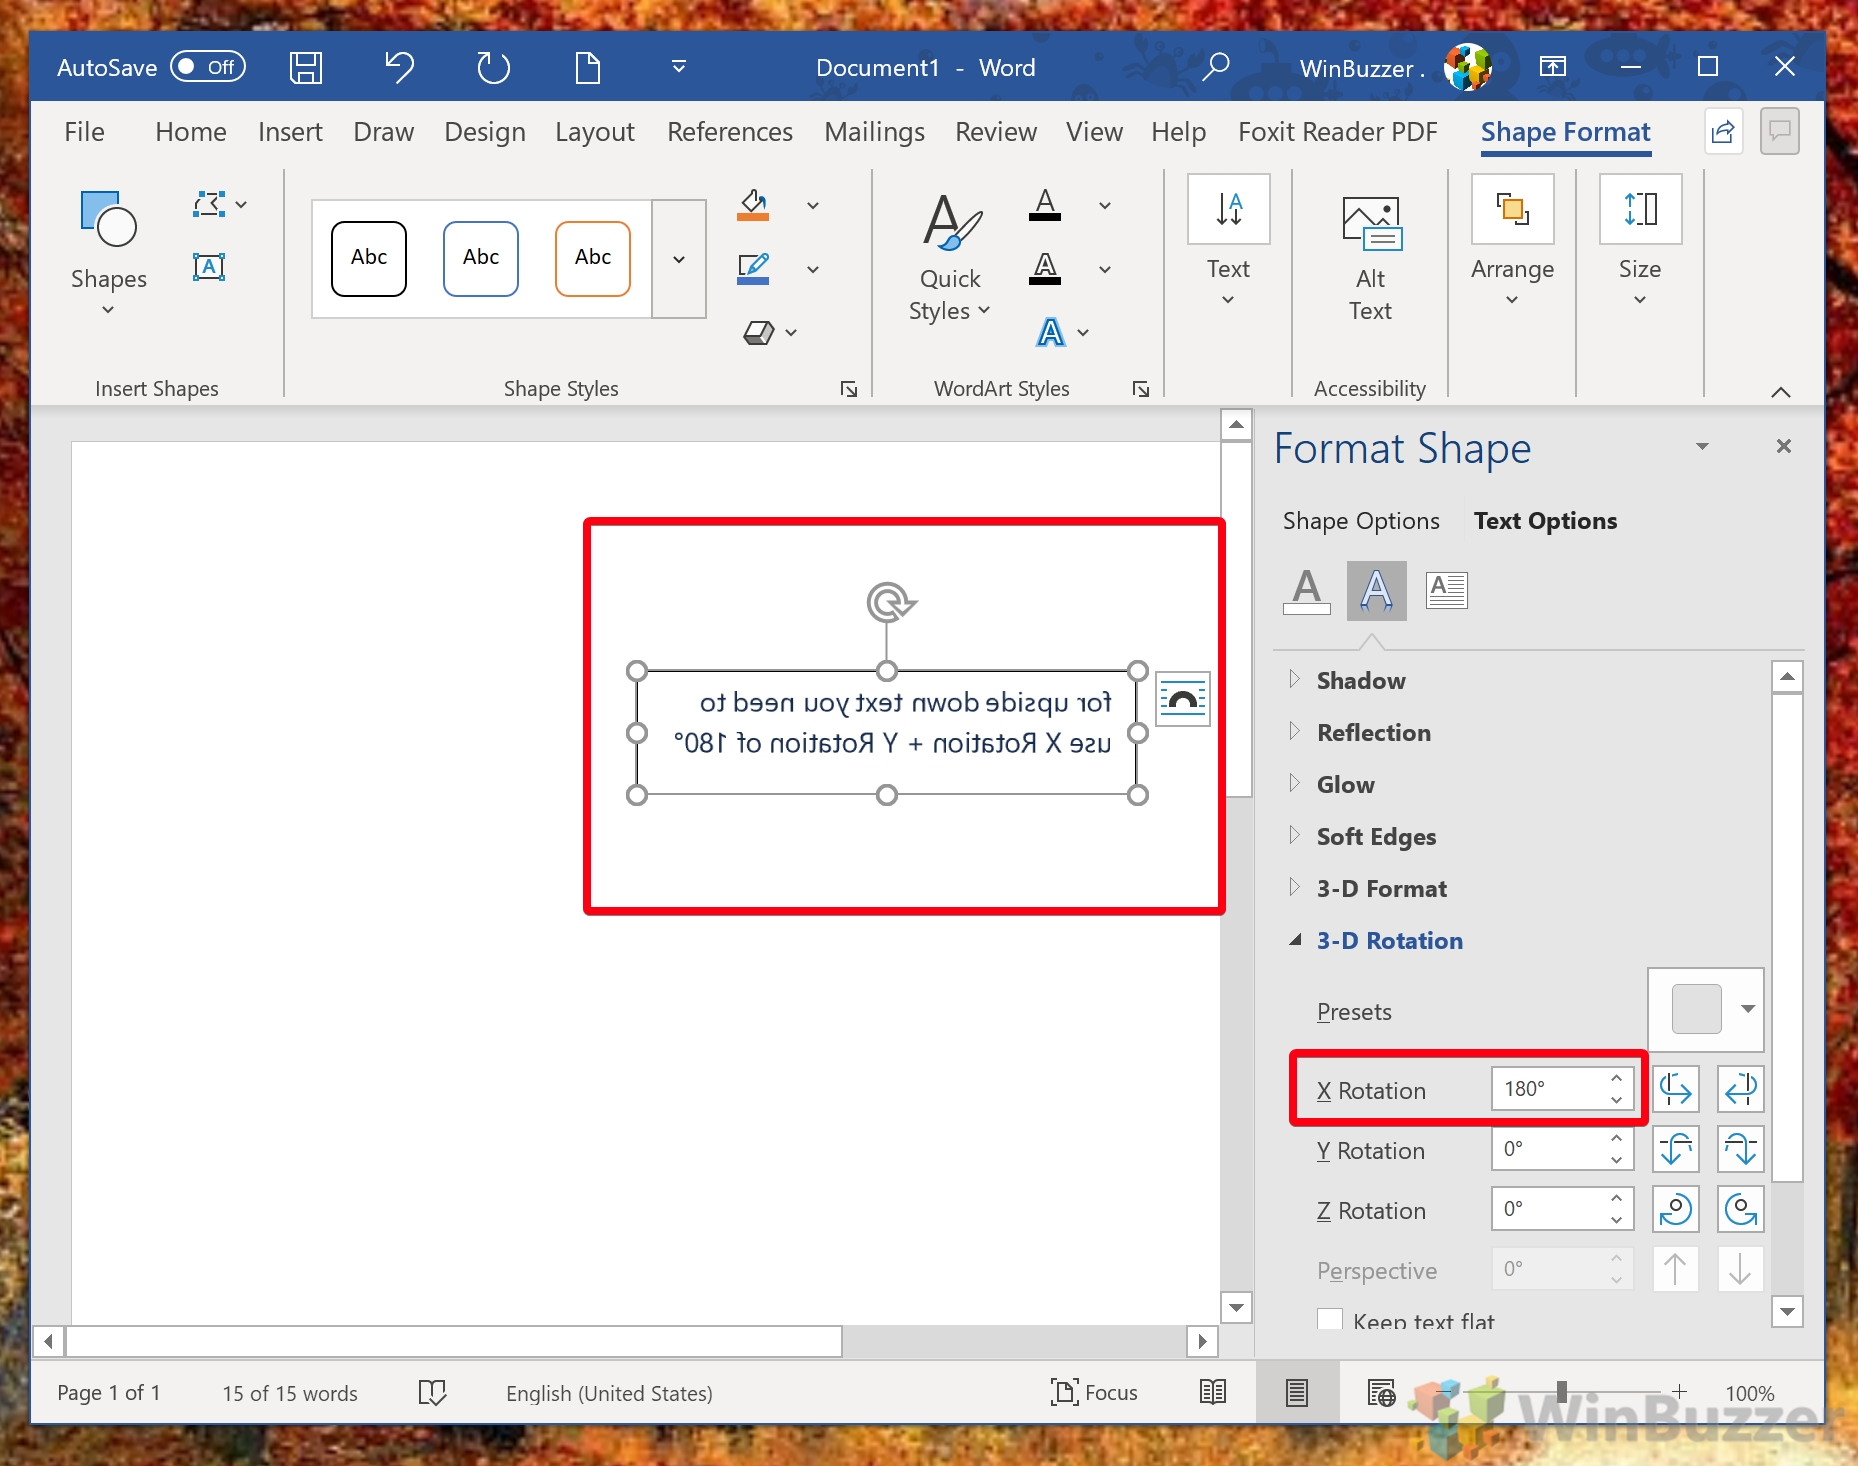 Windows 10 - Word - Text Box - Shape Format - Text Effects - 3-D Rotation Options - X Rotation 180º